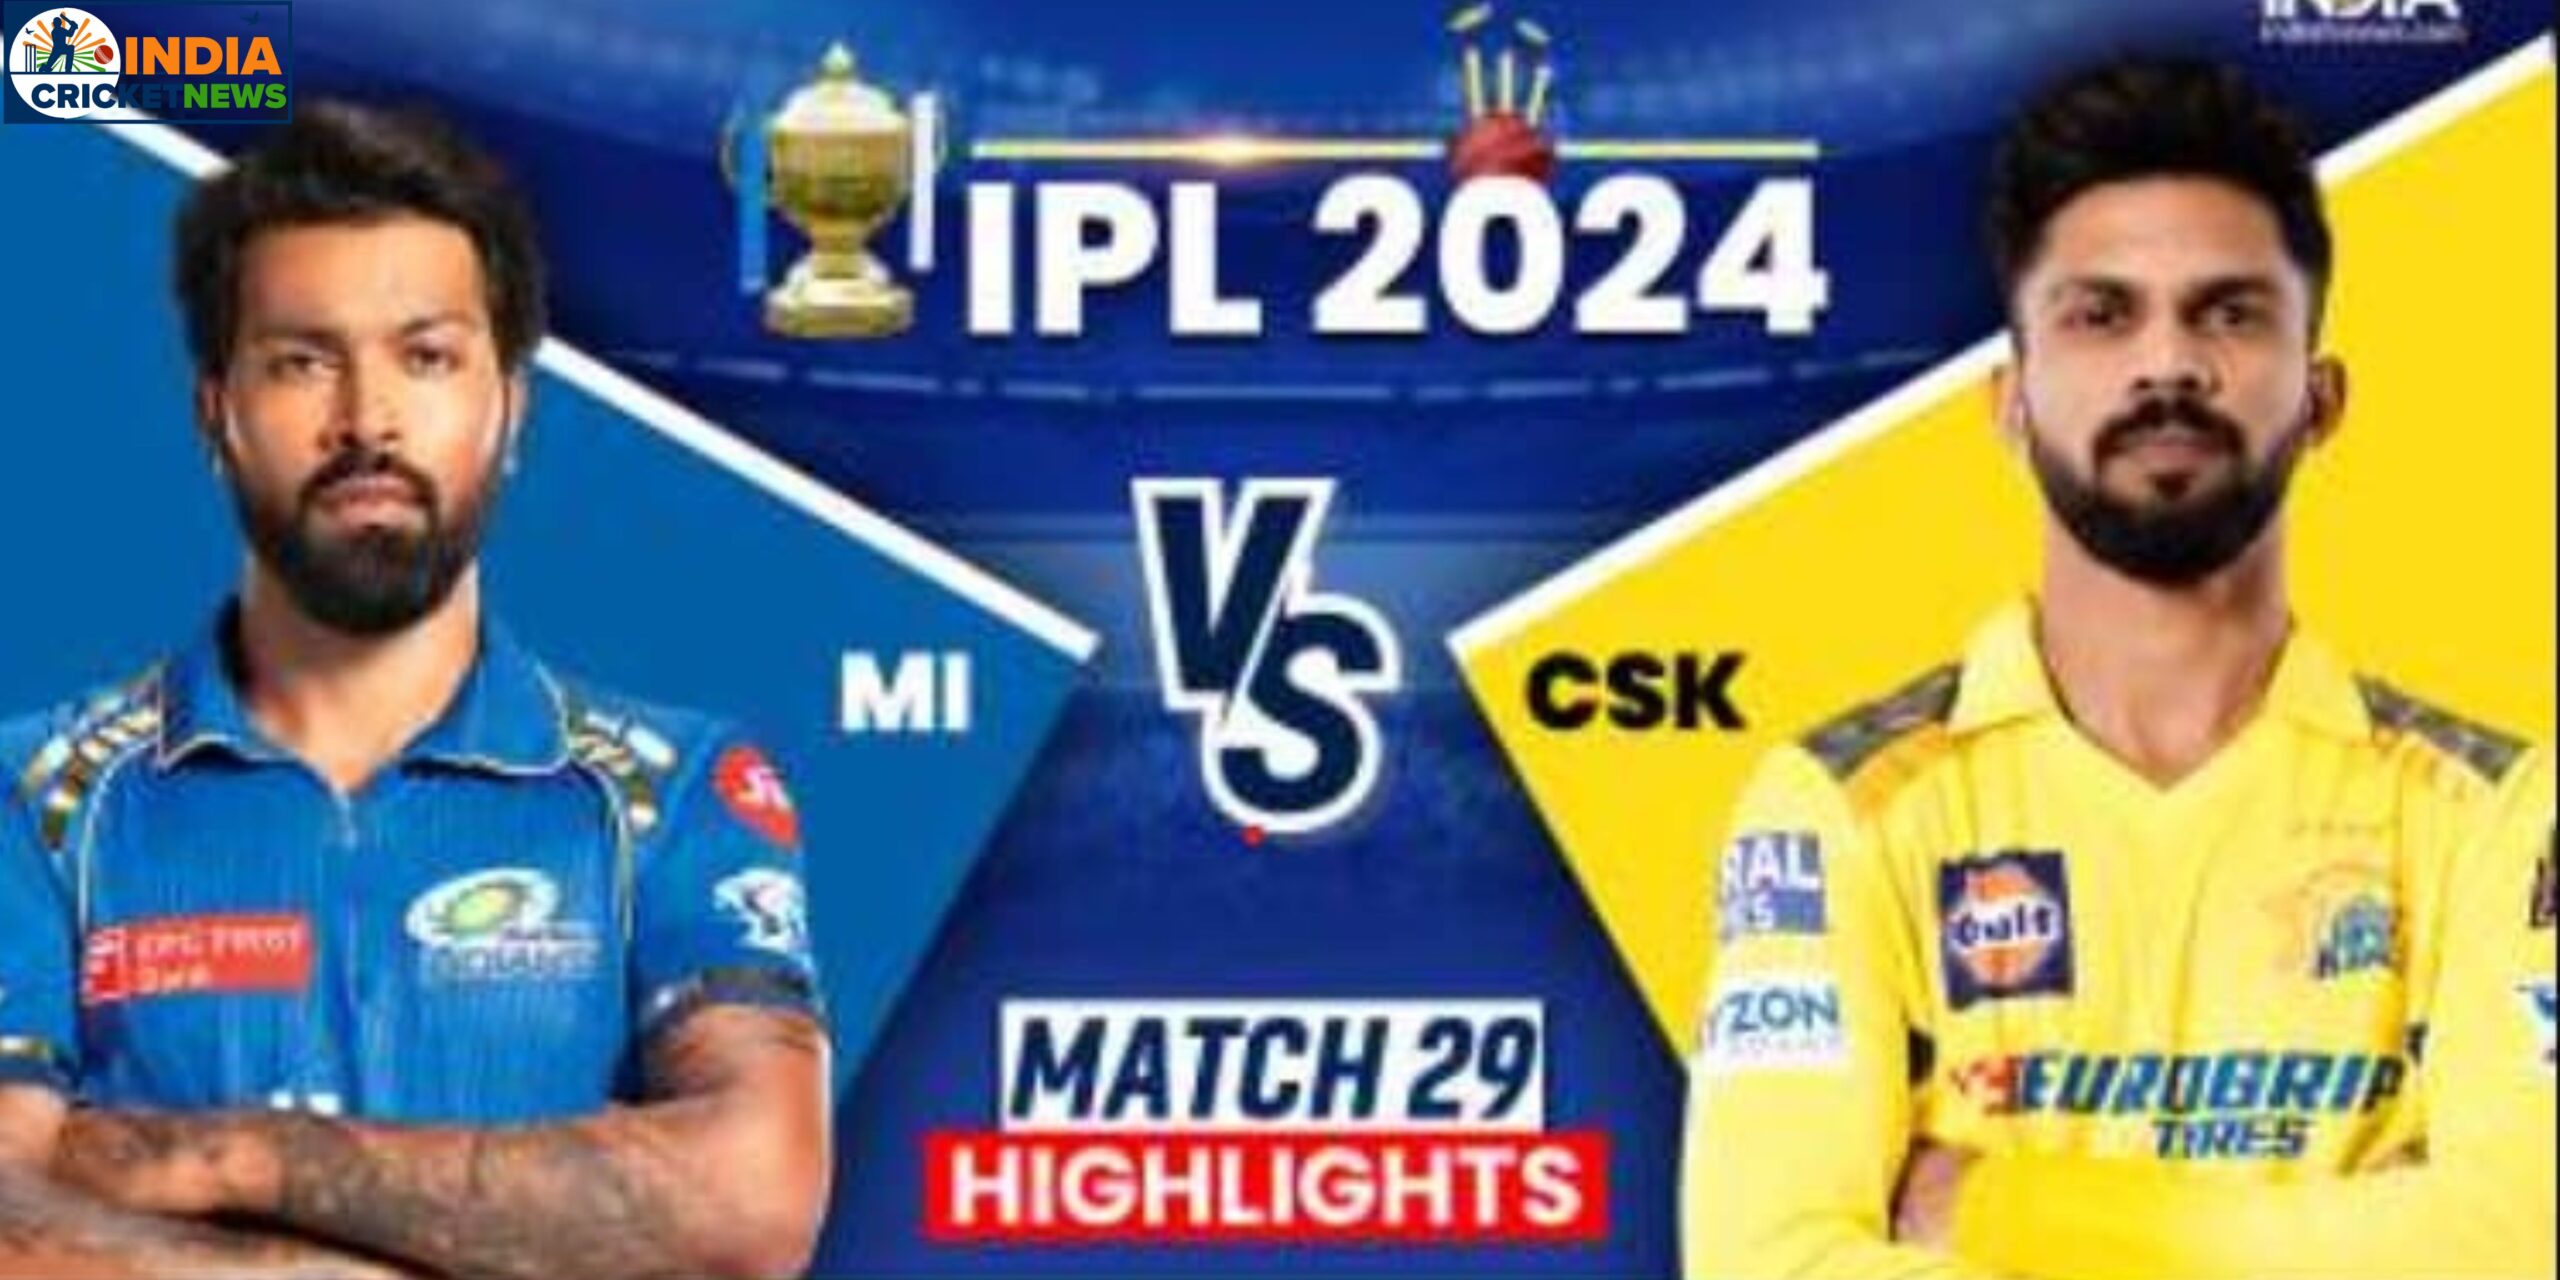 MI vs CSK IPL 2024 Highlights: Rohit Sharma's 105 in vain as Chennai record dominant win over Mumbai Indians